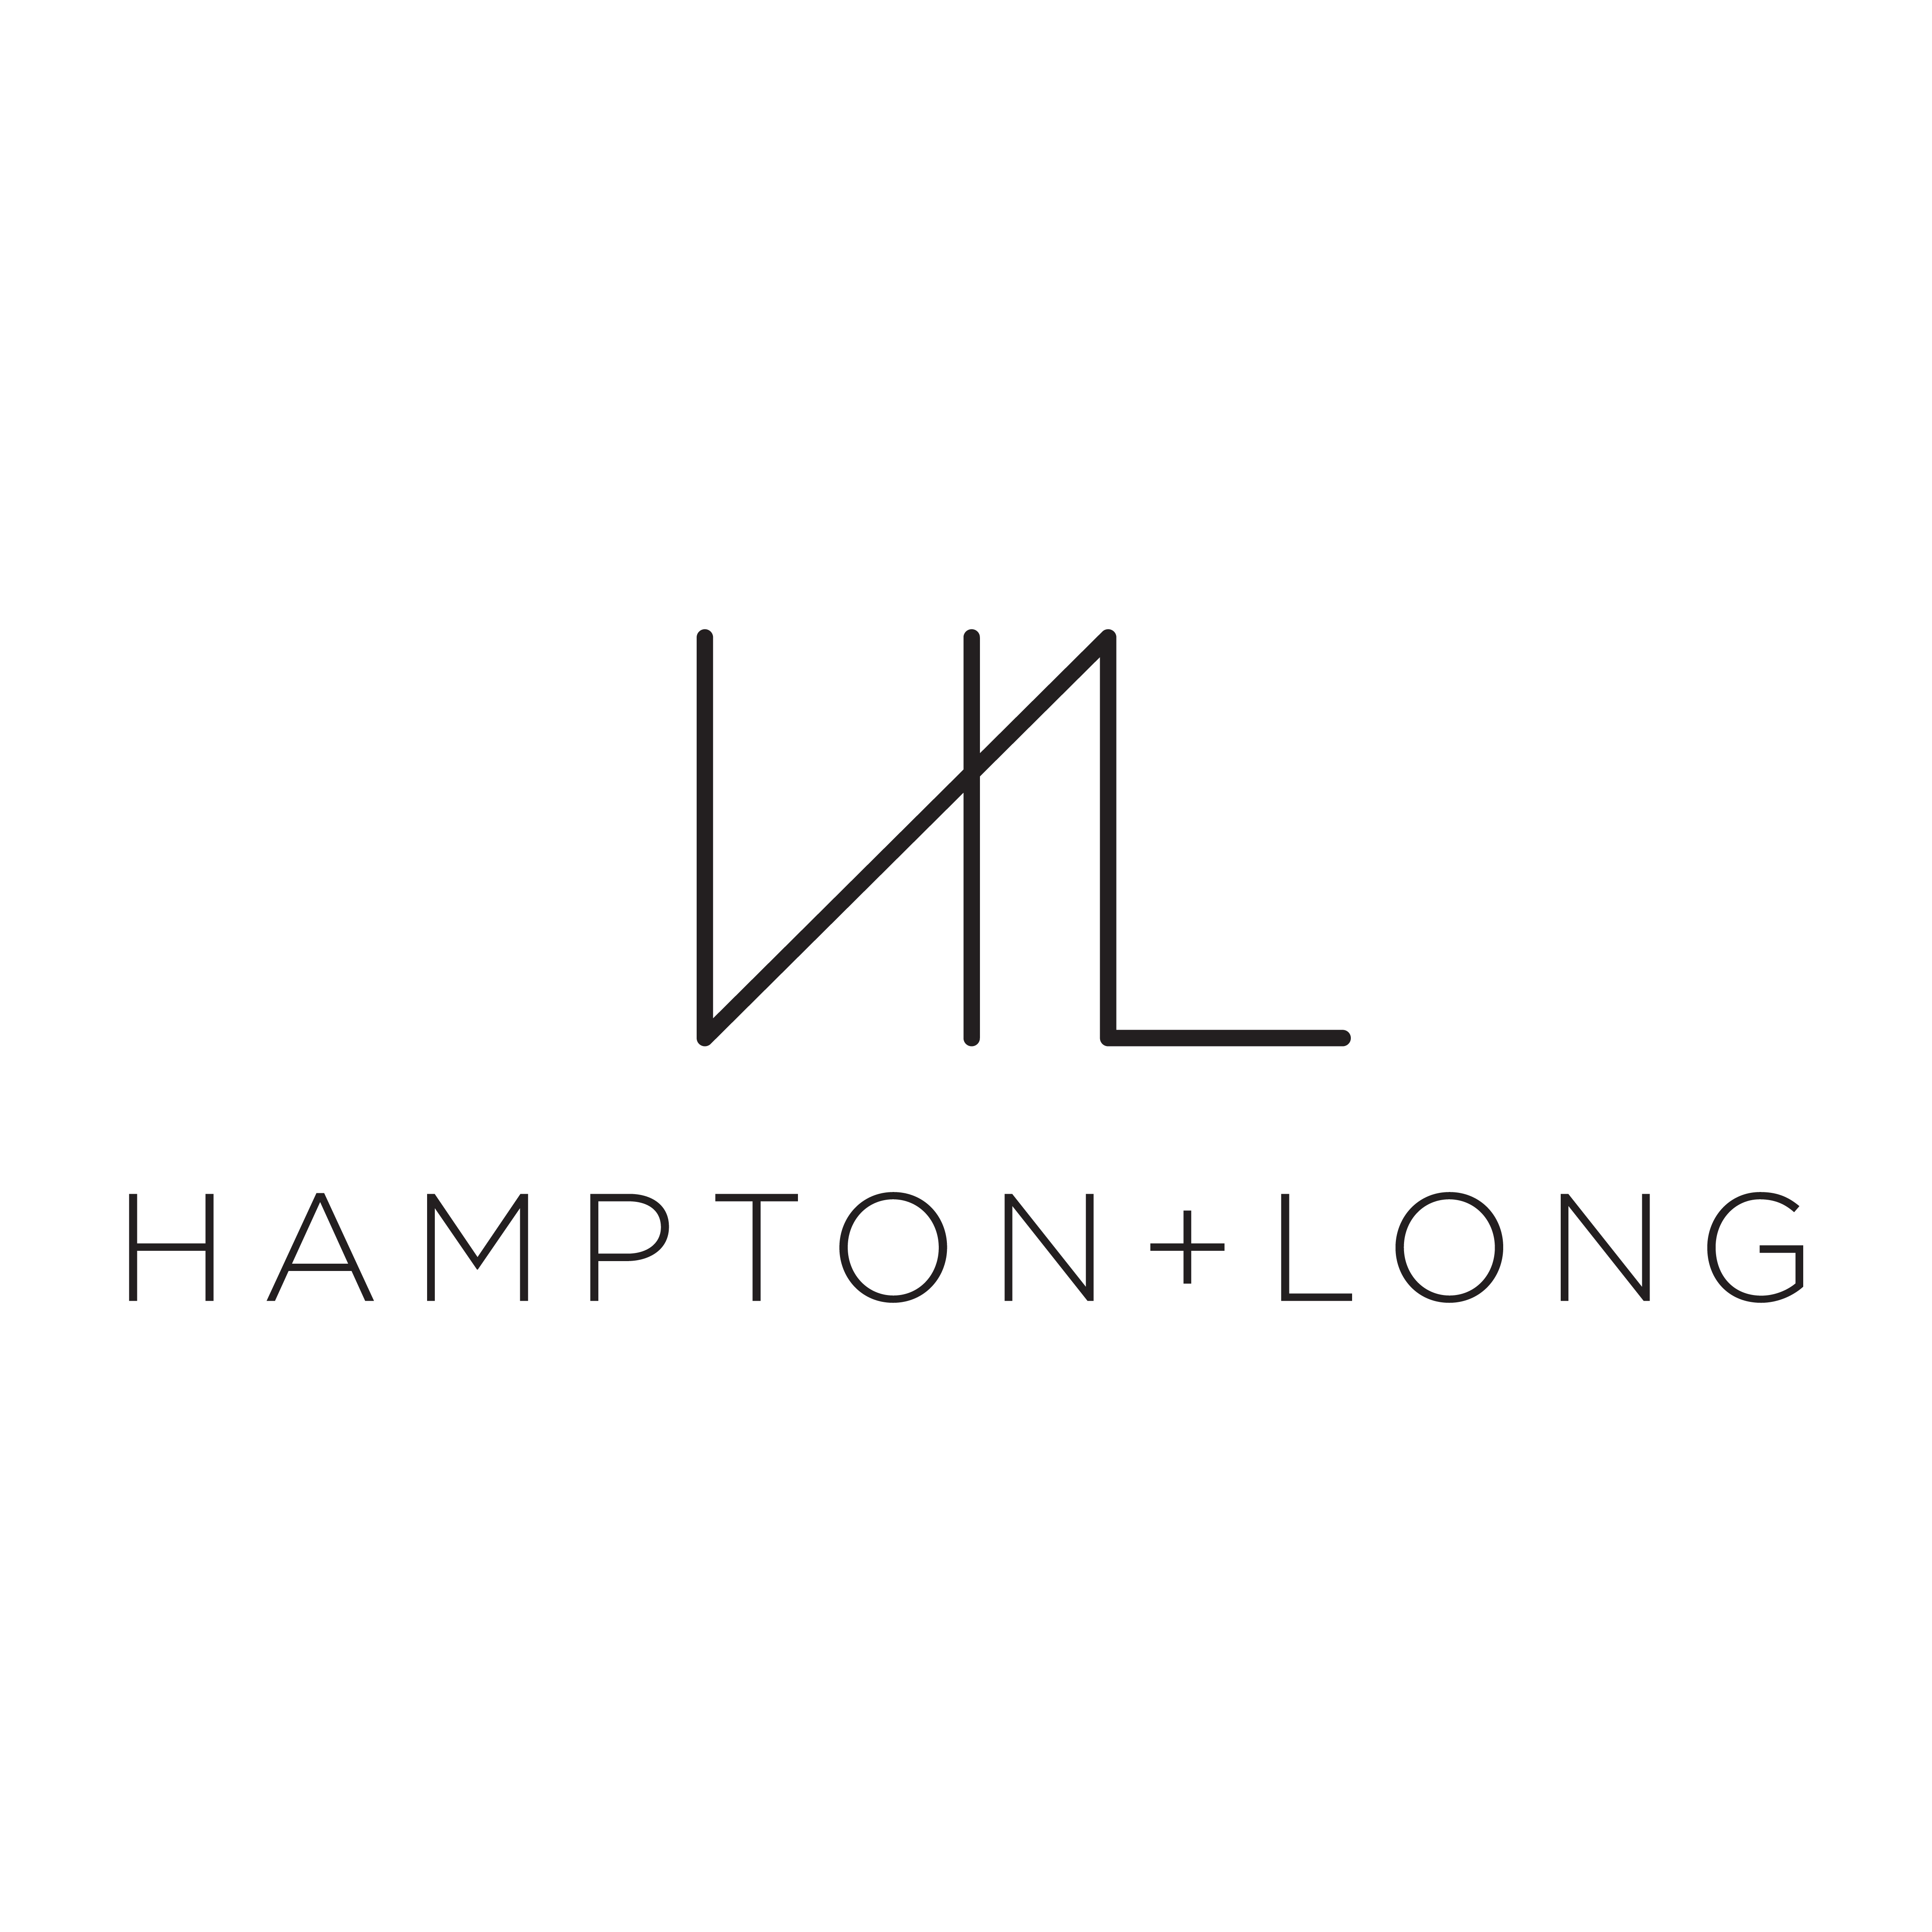 The logo of Hampton+Long